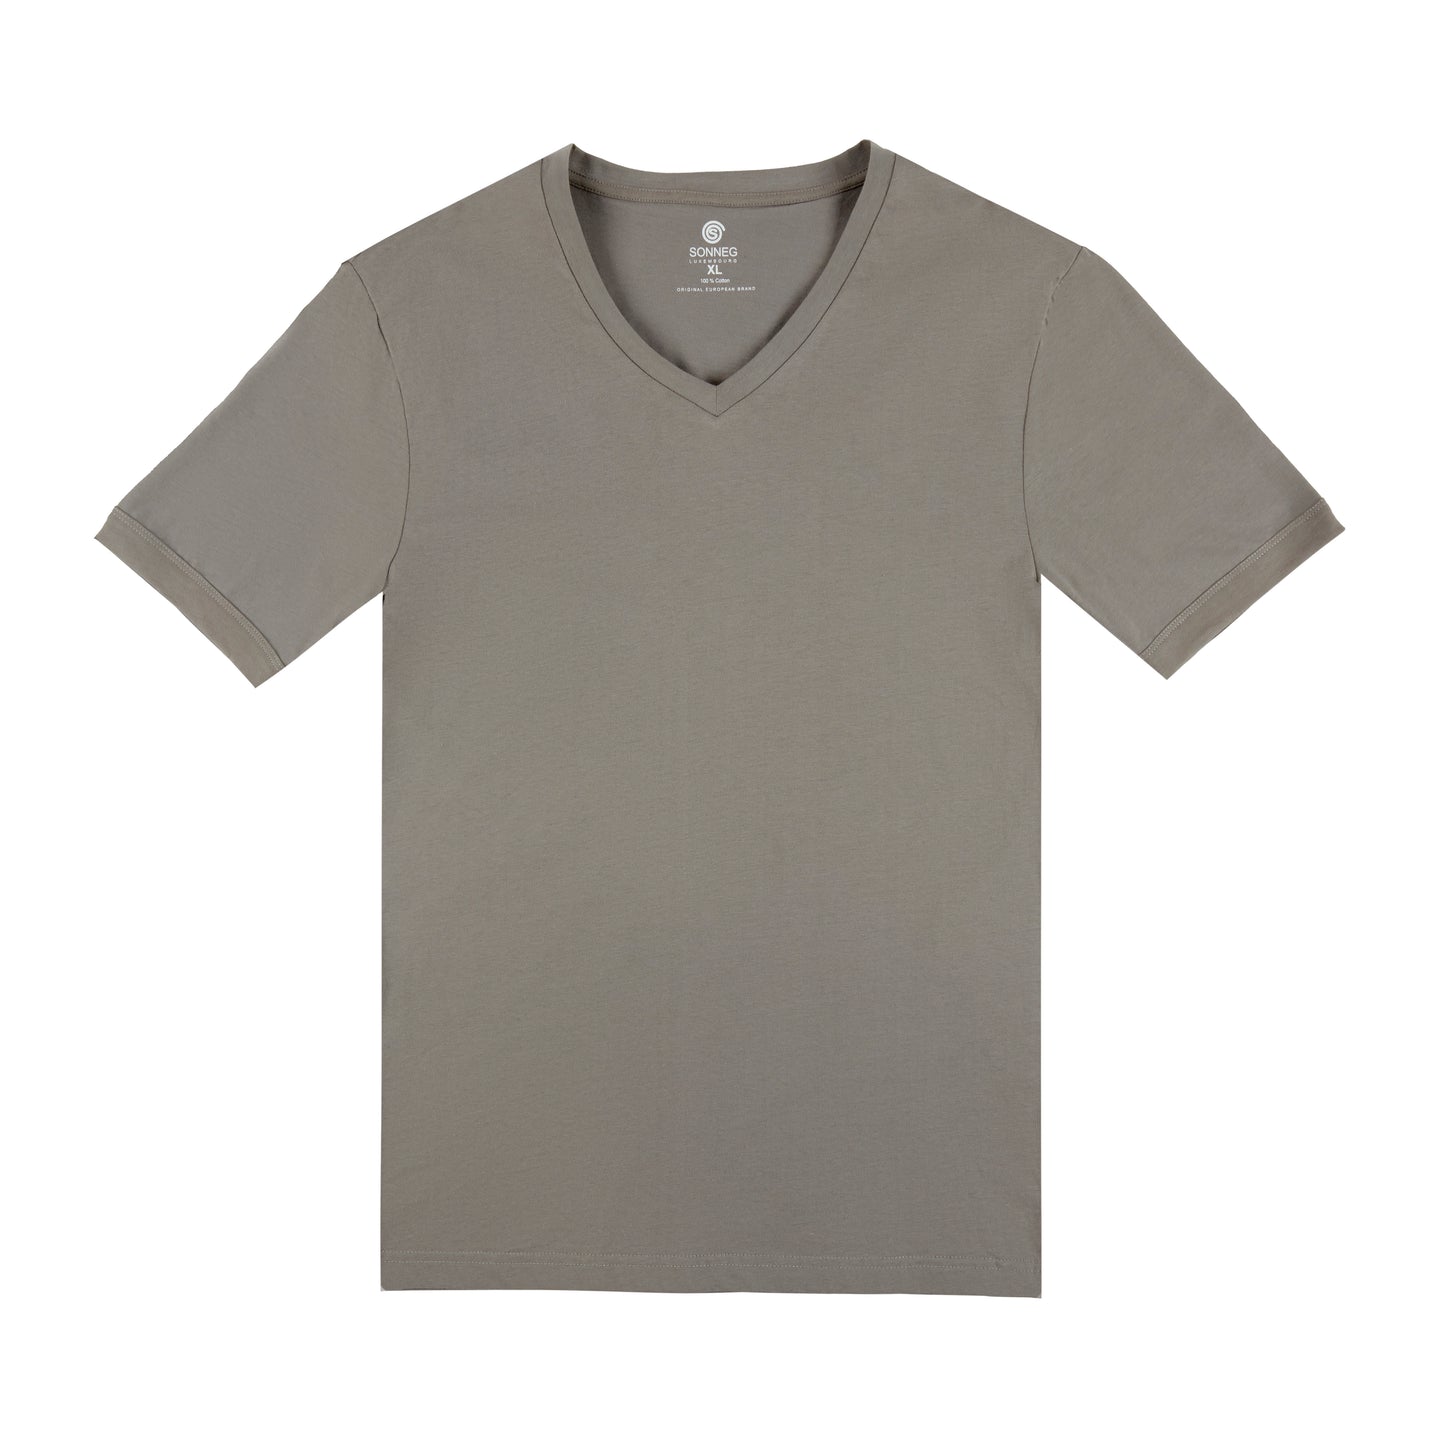 V-neck deep, ash grey, bodyfit T-shirt – pack of 2 or 4 tees